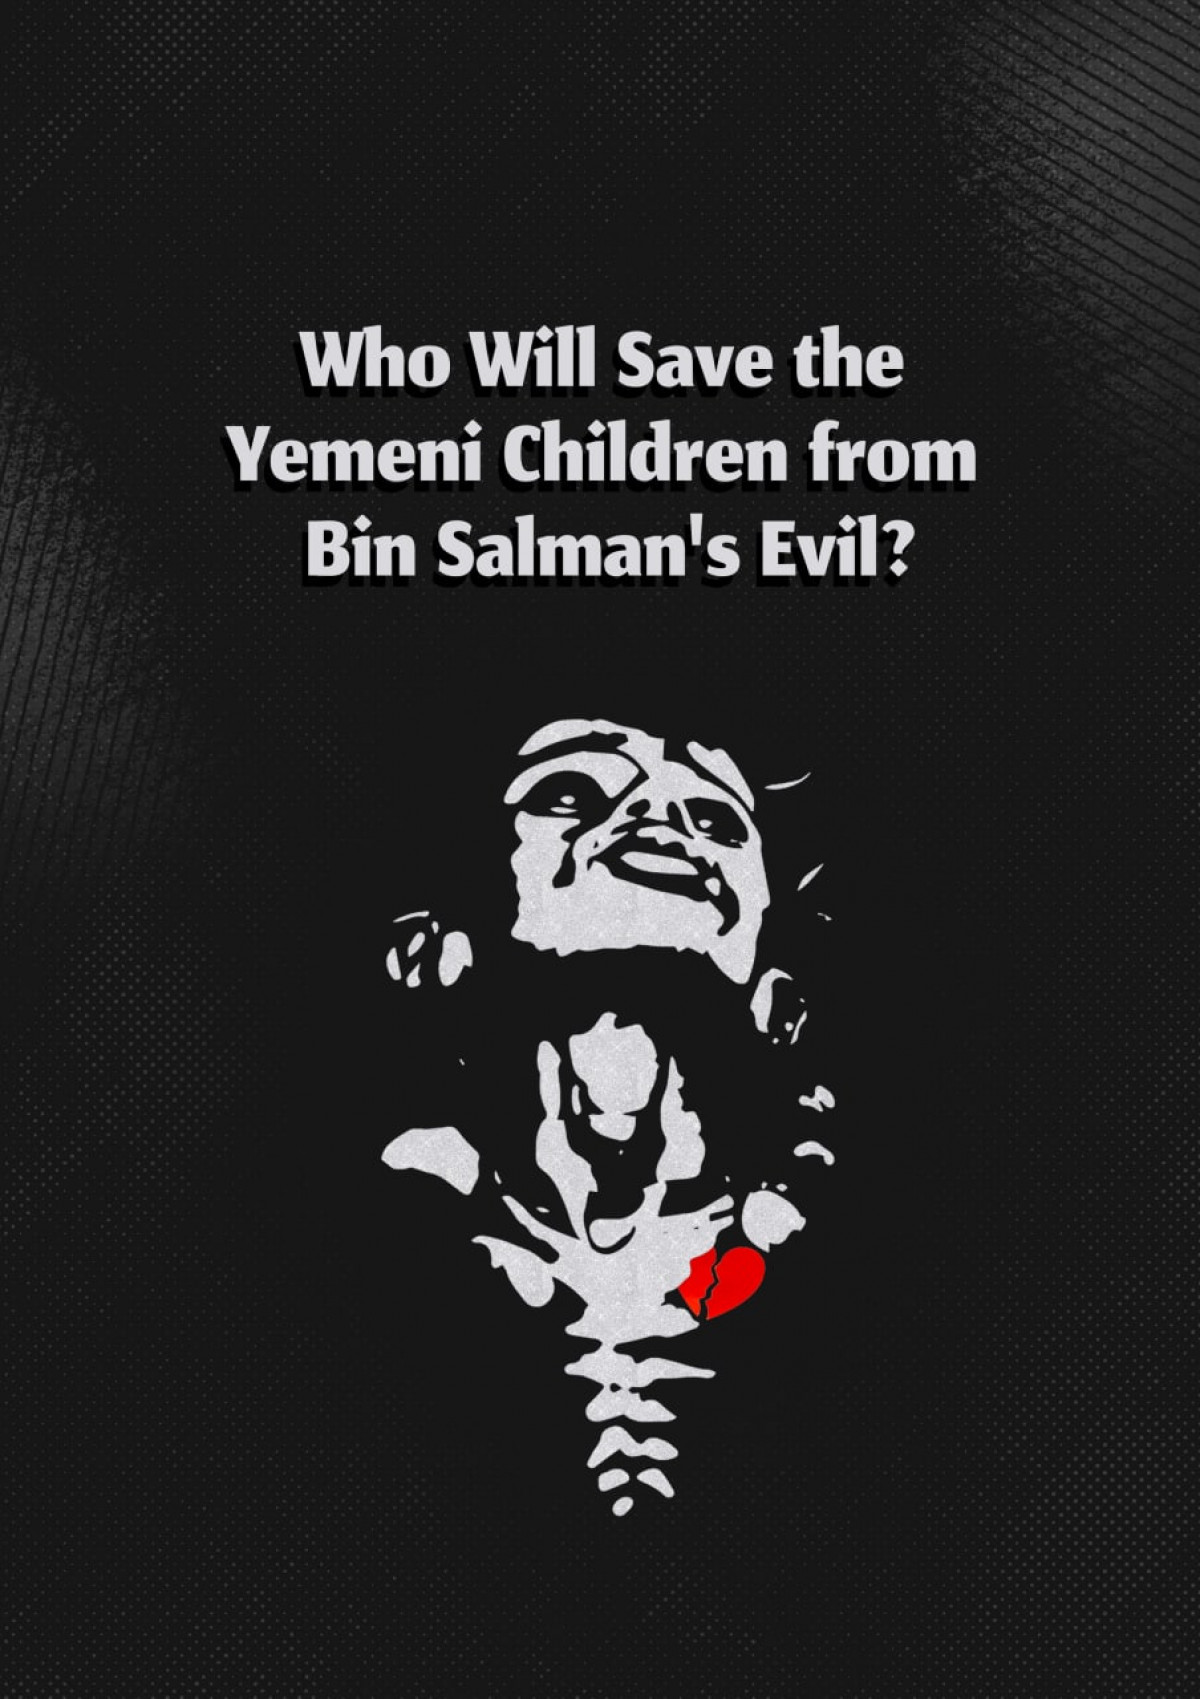 who will save the Yemeni children from bin Salman's evil?